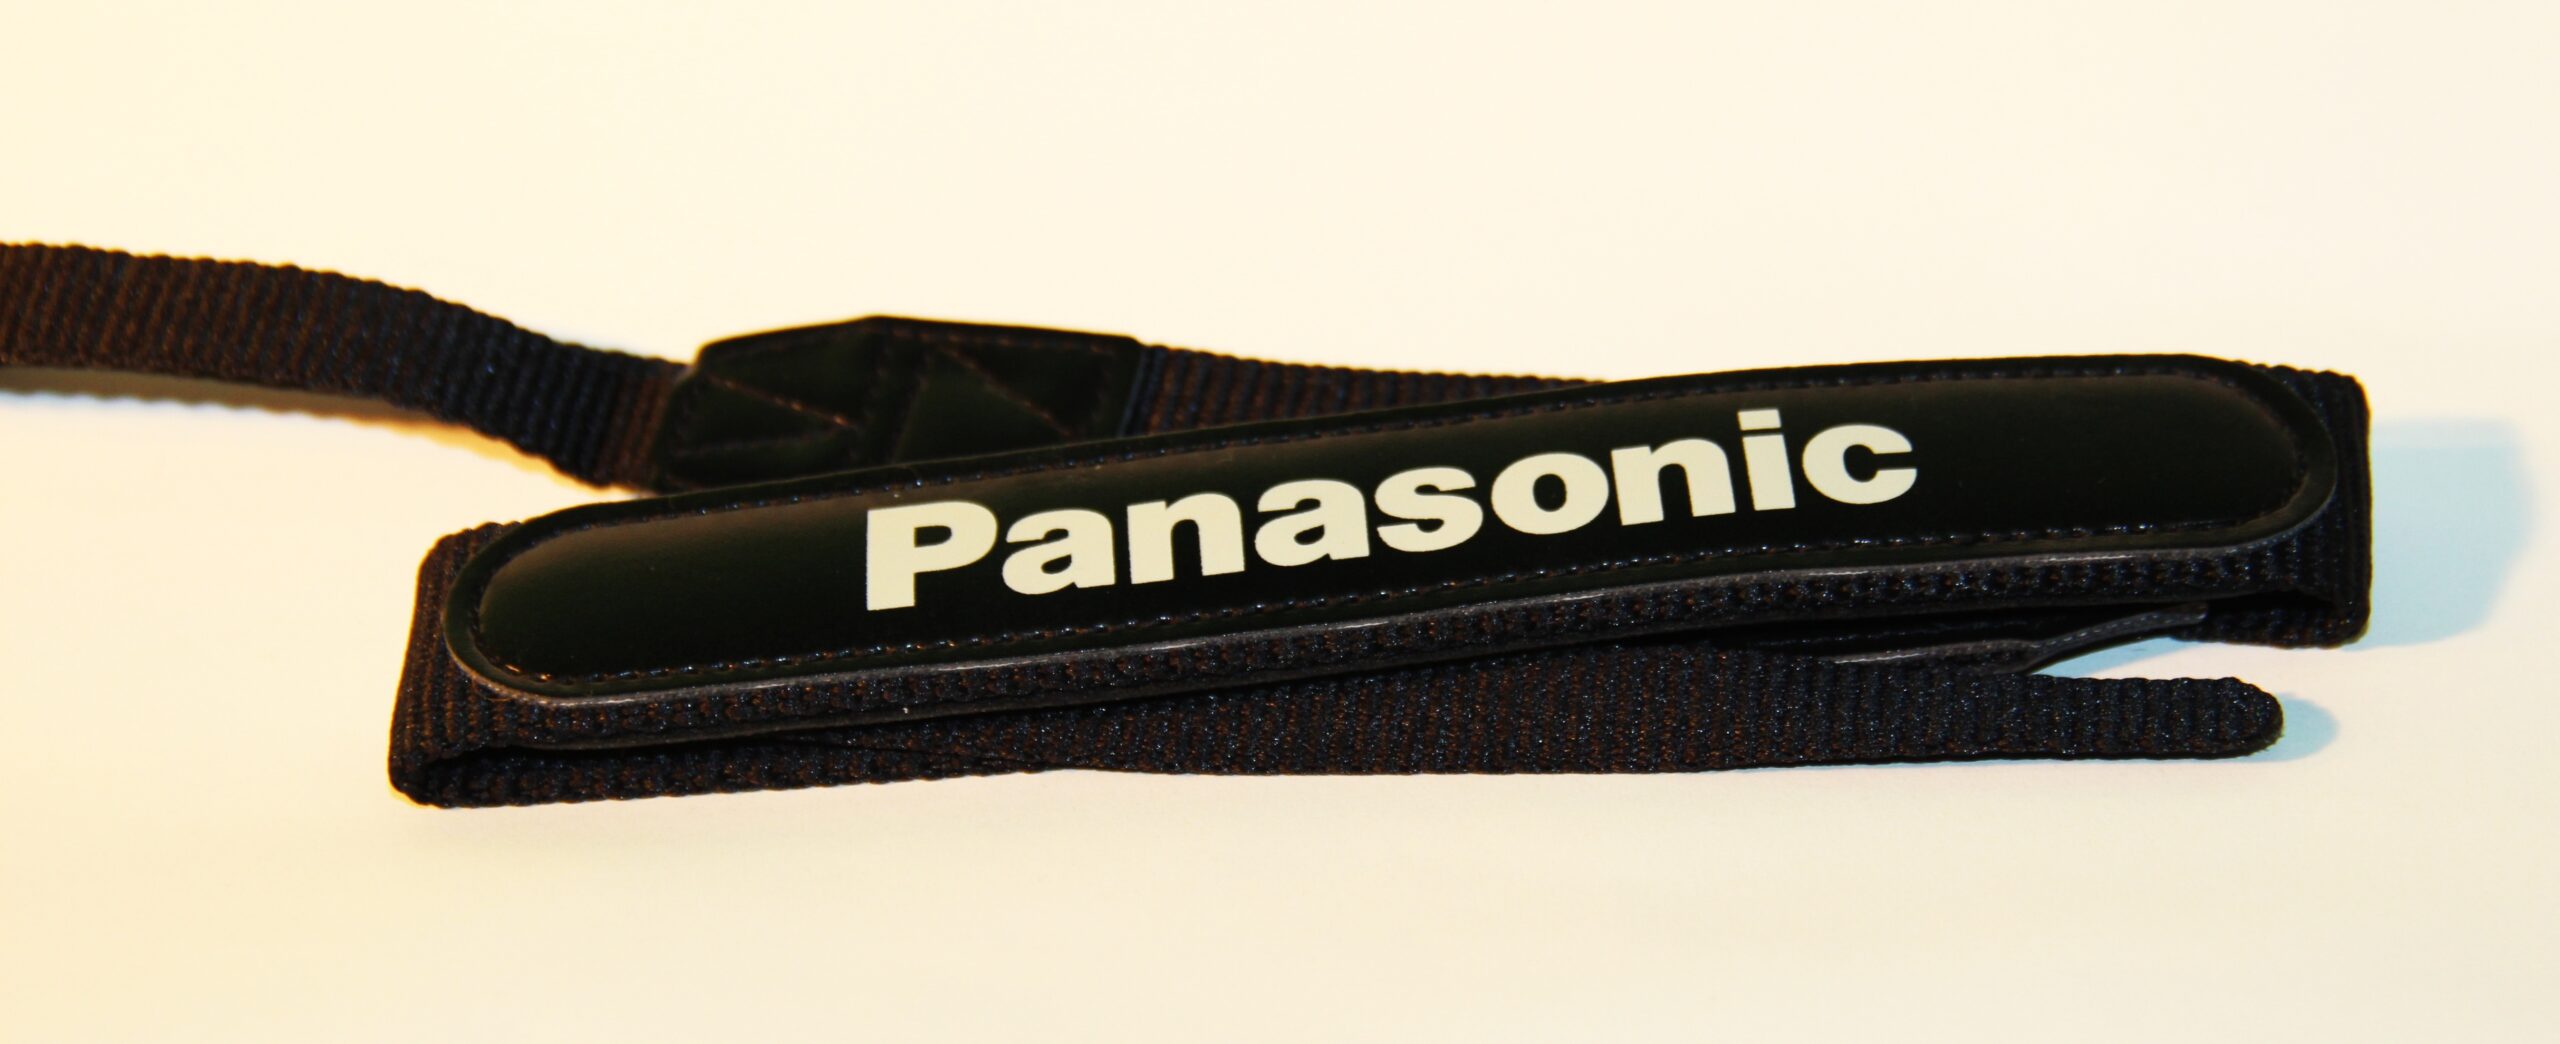 Top Panasonic Products